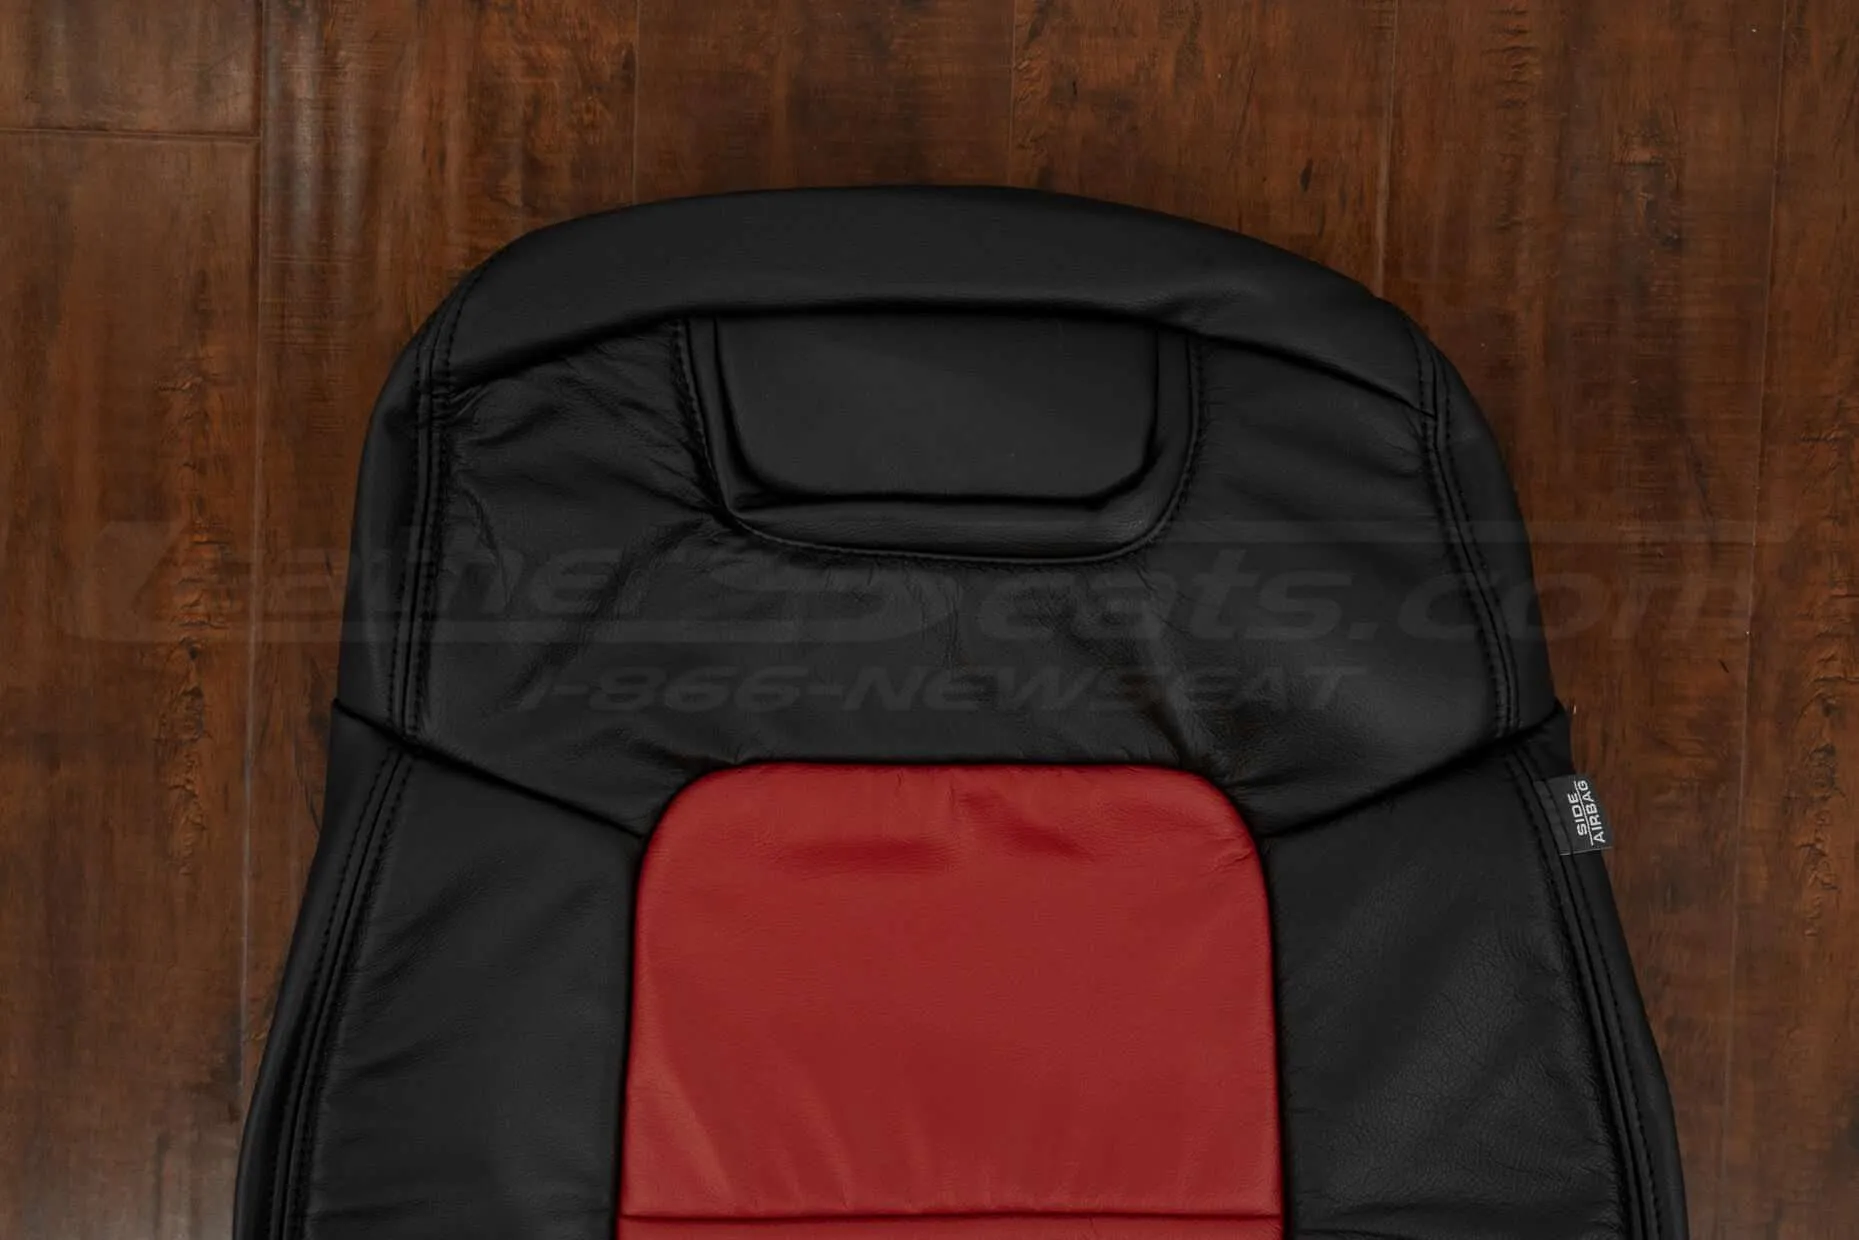 Pontiac G8 Leather Kit - Black & Red - Top section of front backrest